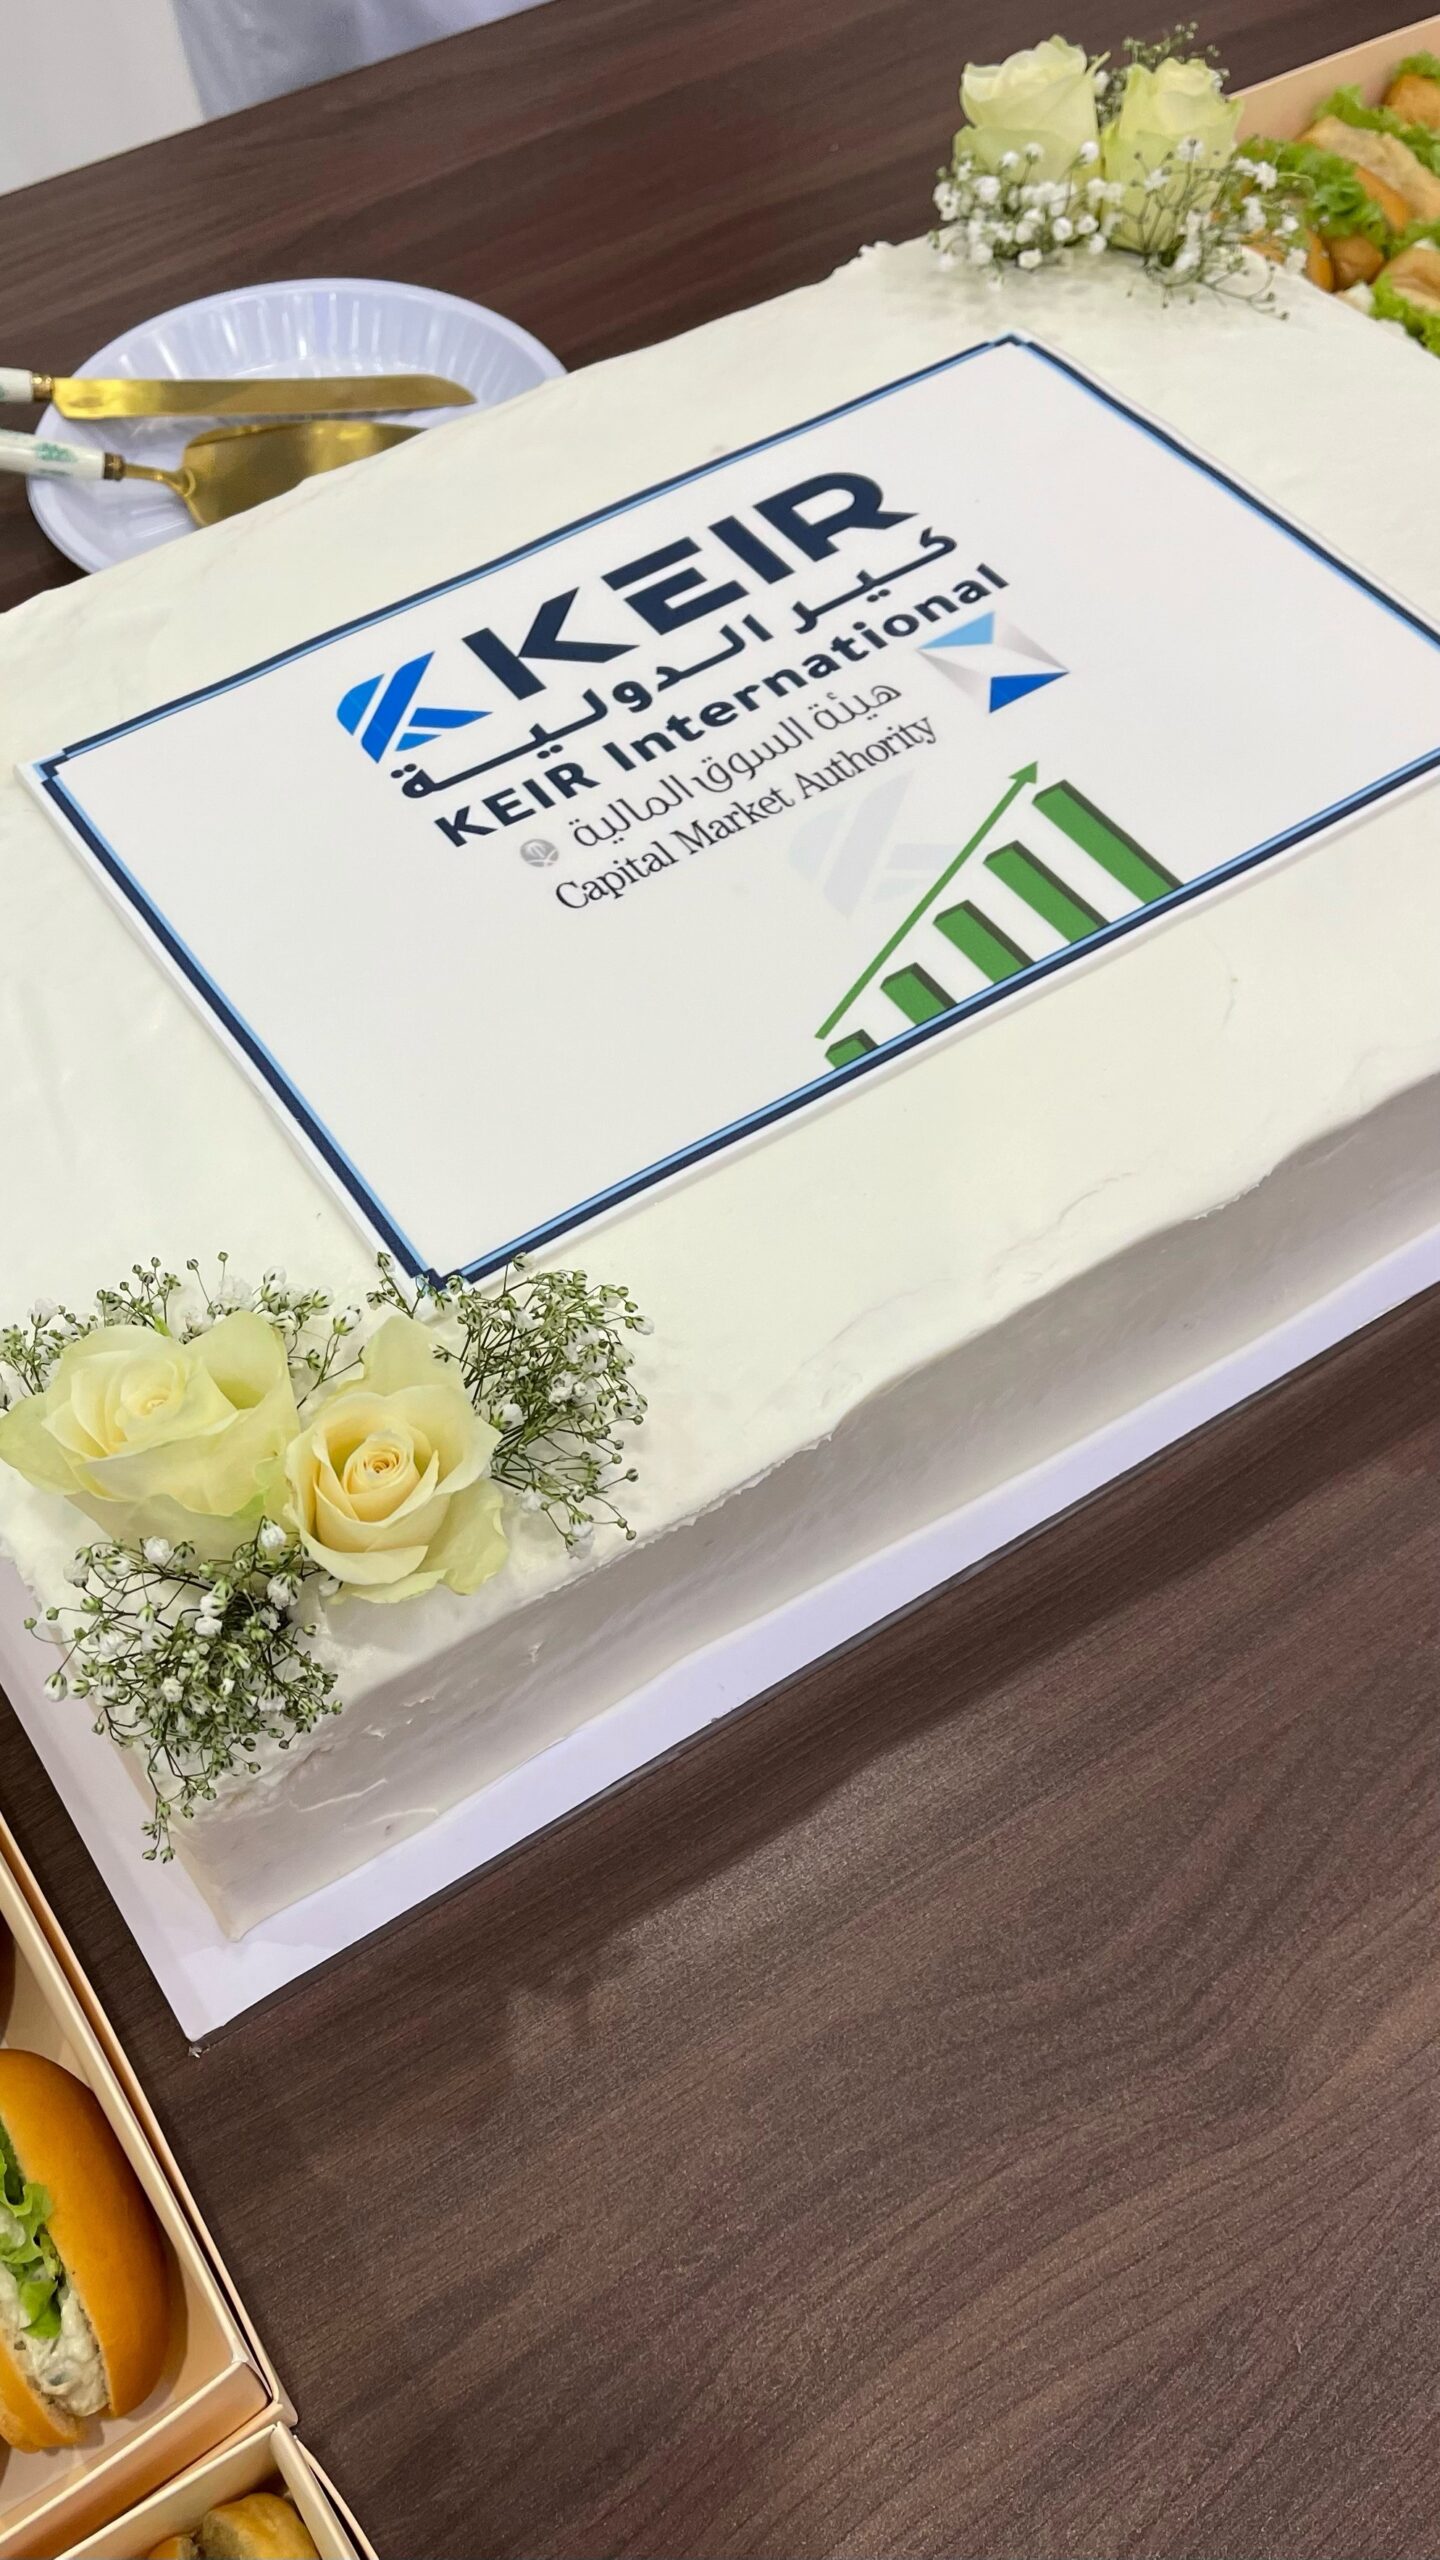 KEIR celebrates listing